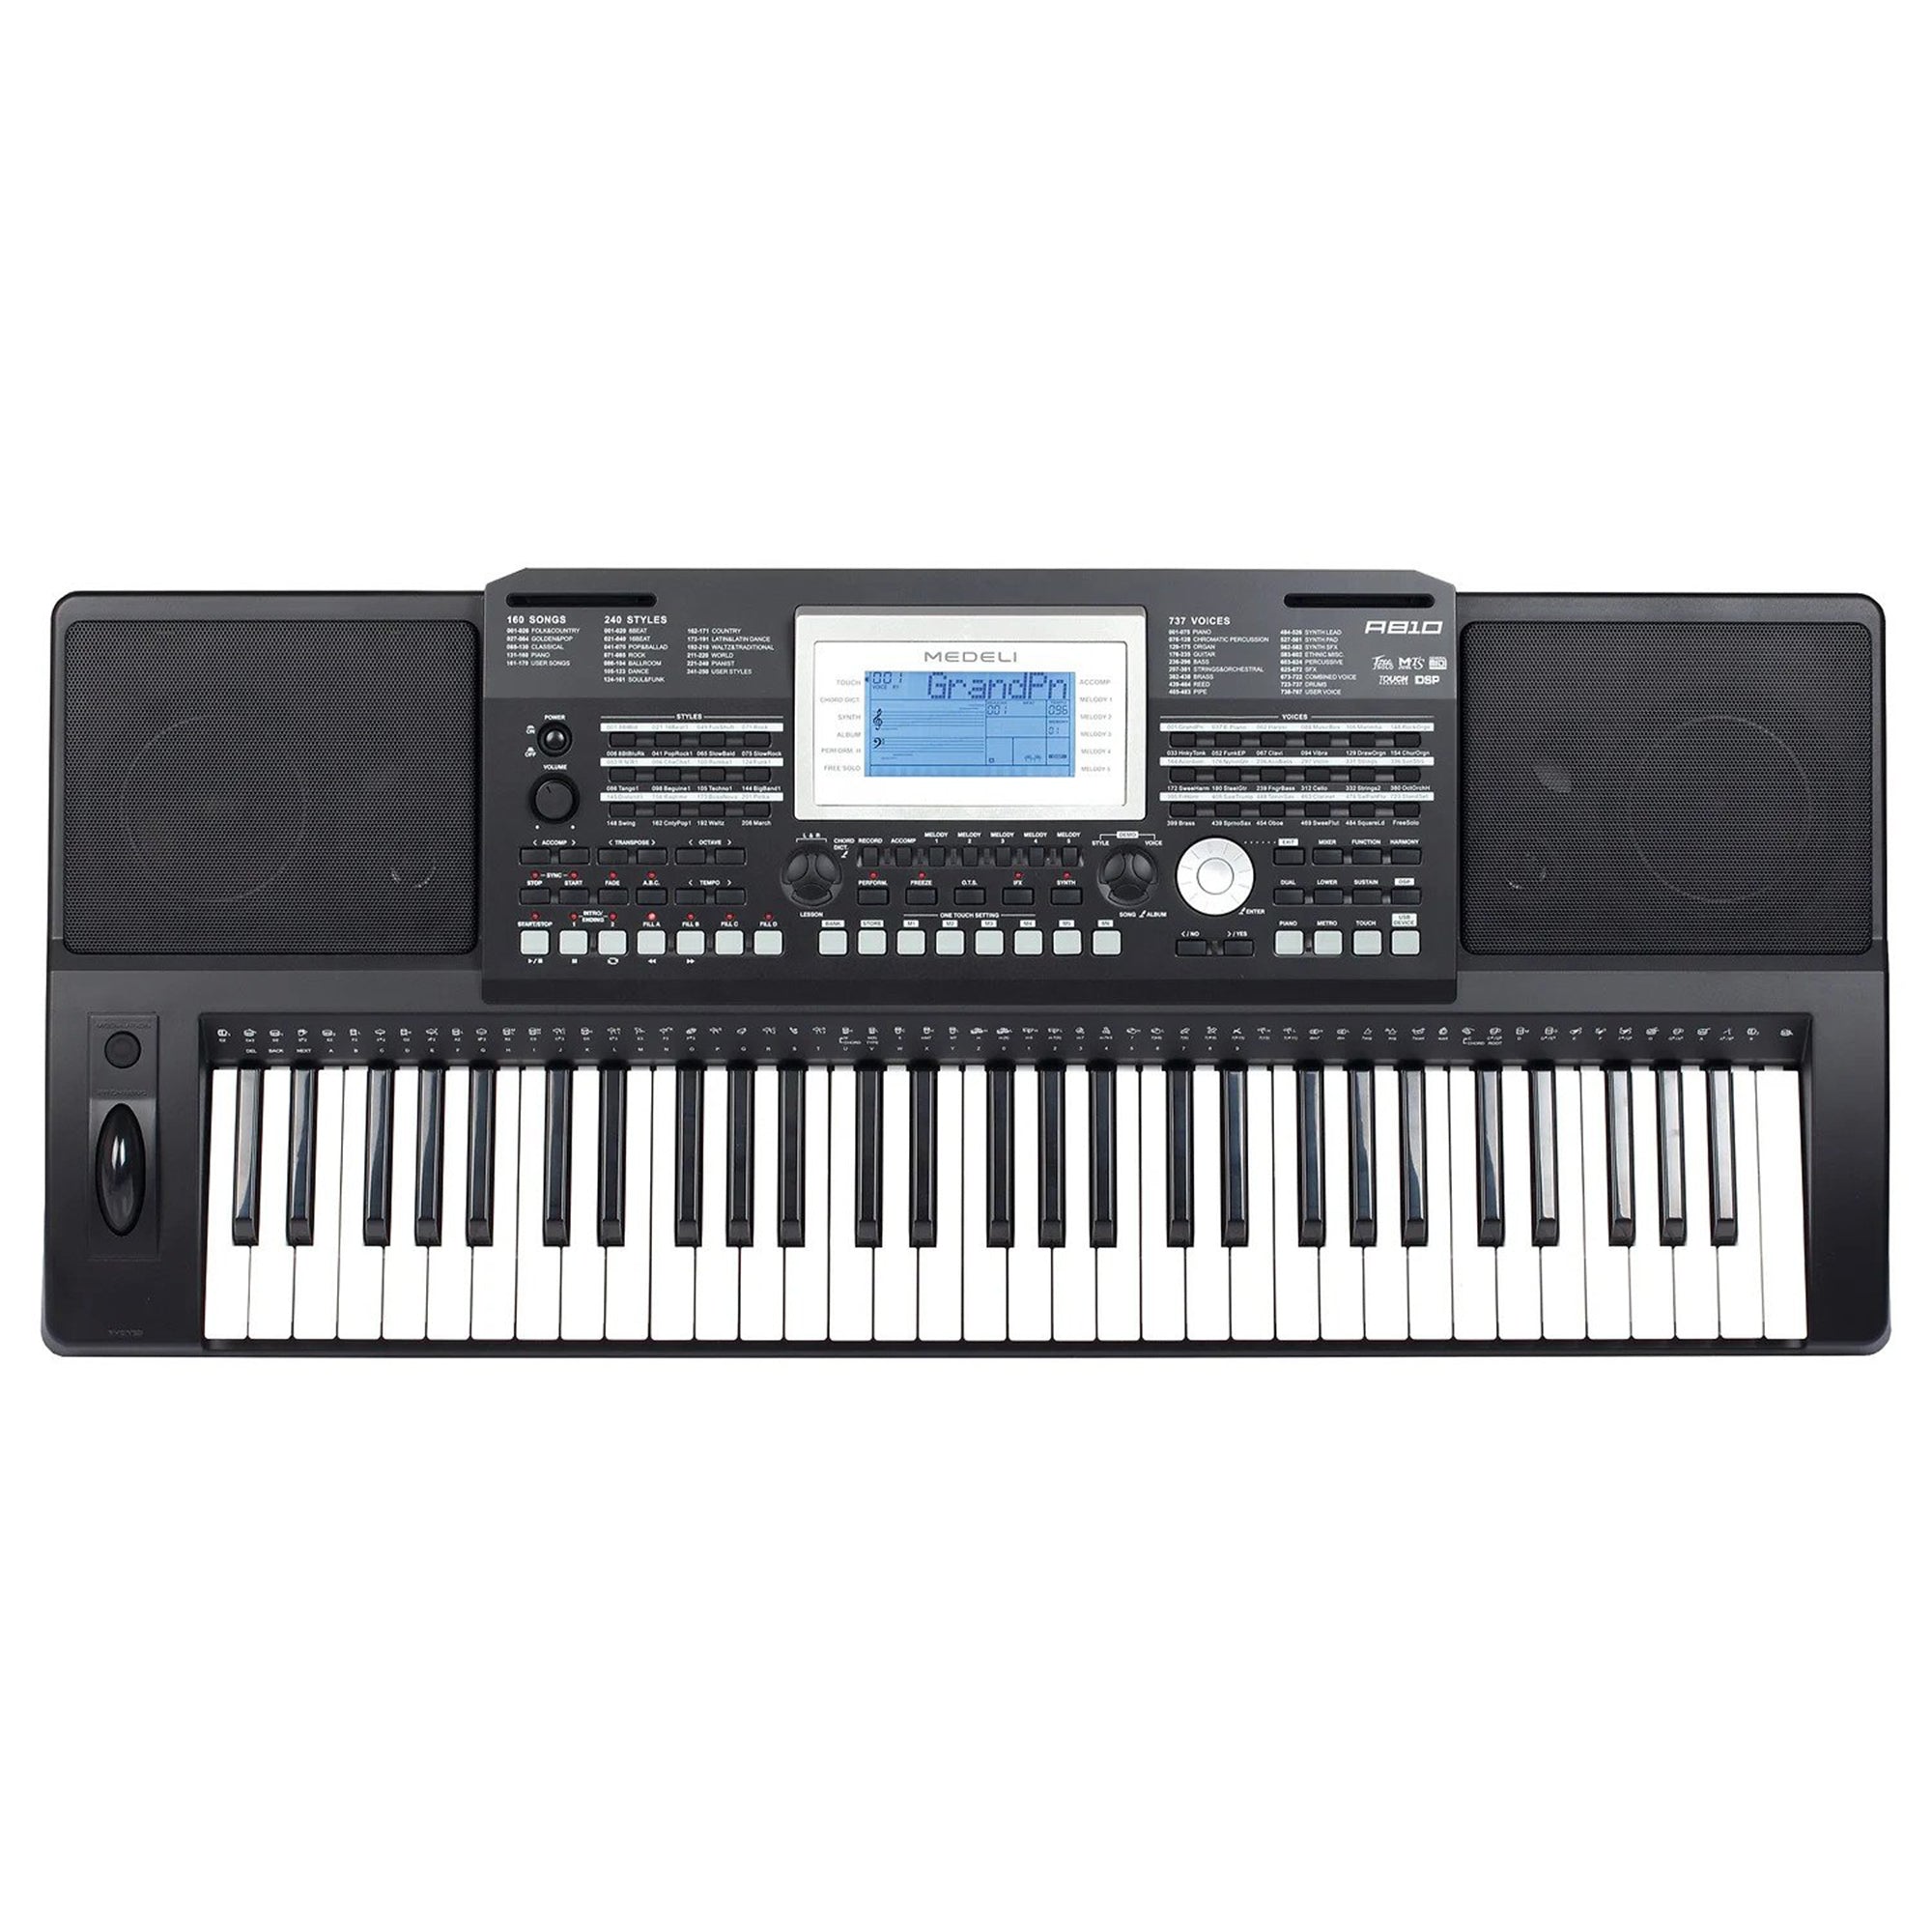 Buy Music Keyboard